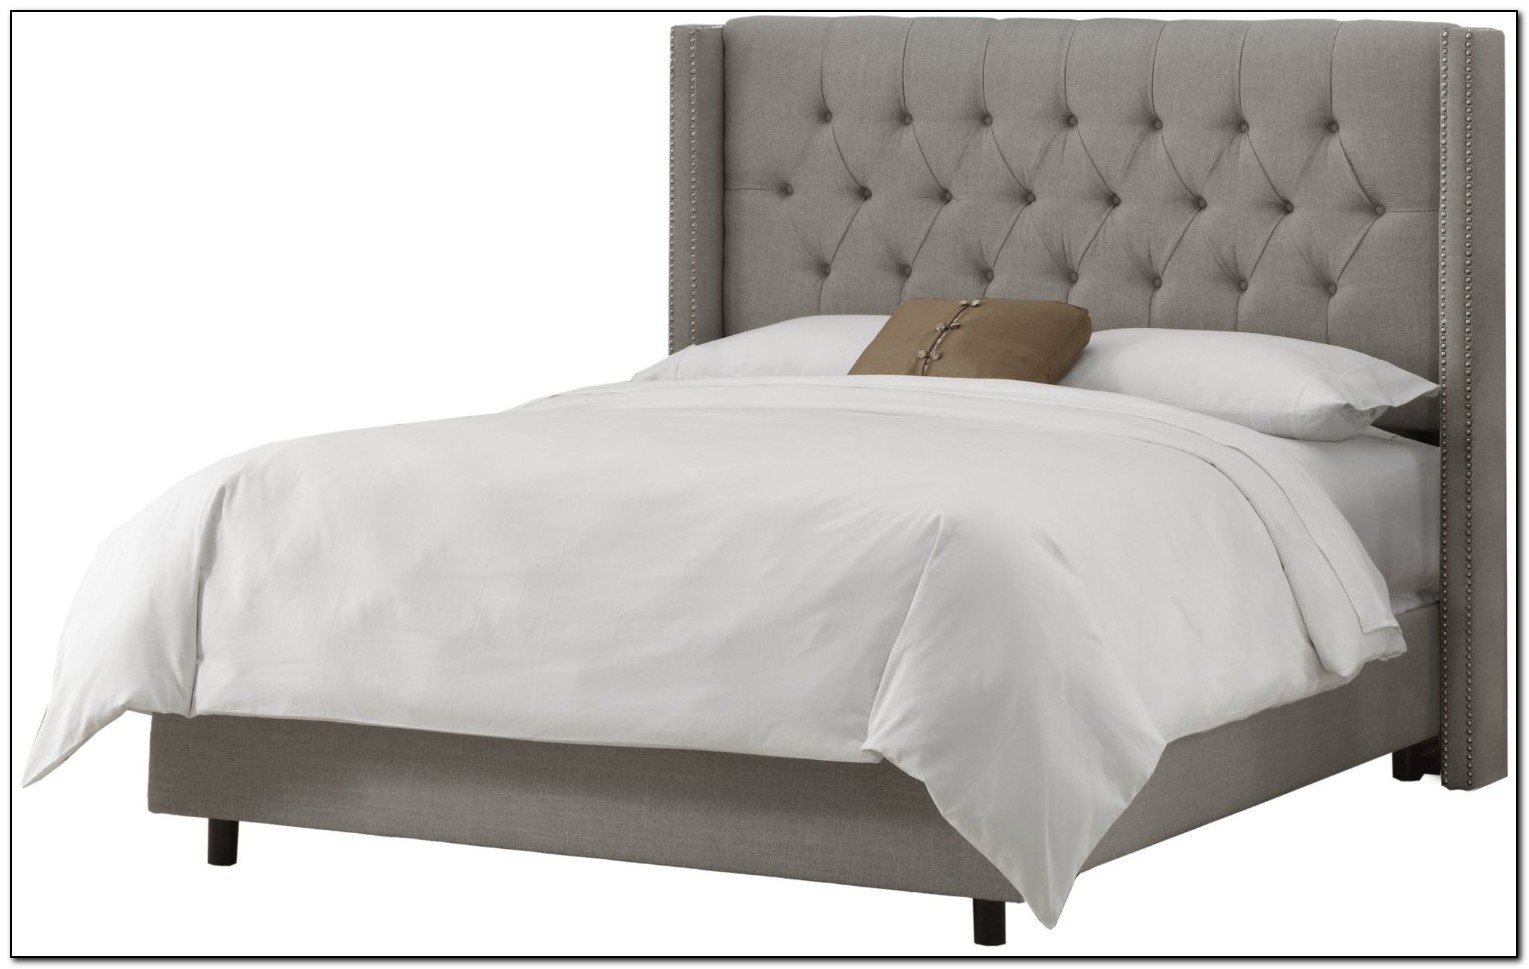 King Platform Bed Frame Canada - Beds : Home Design Ideas #4Vn4r8xQNe3839